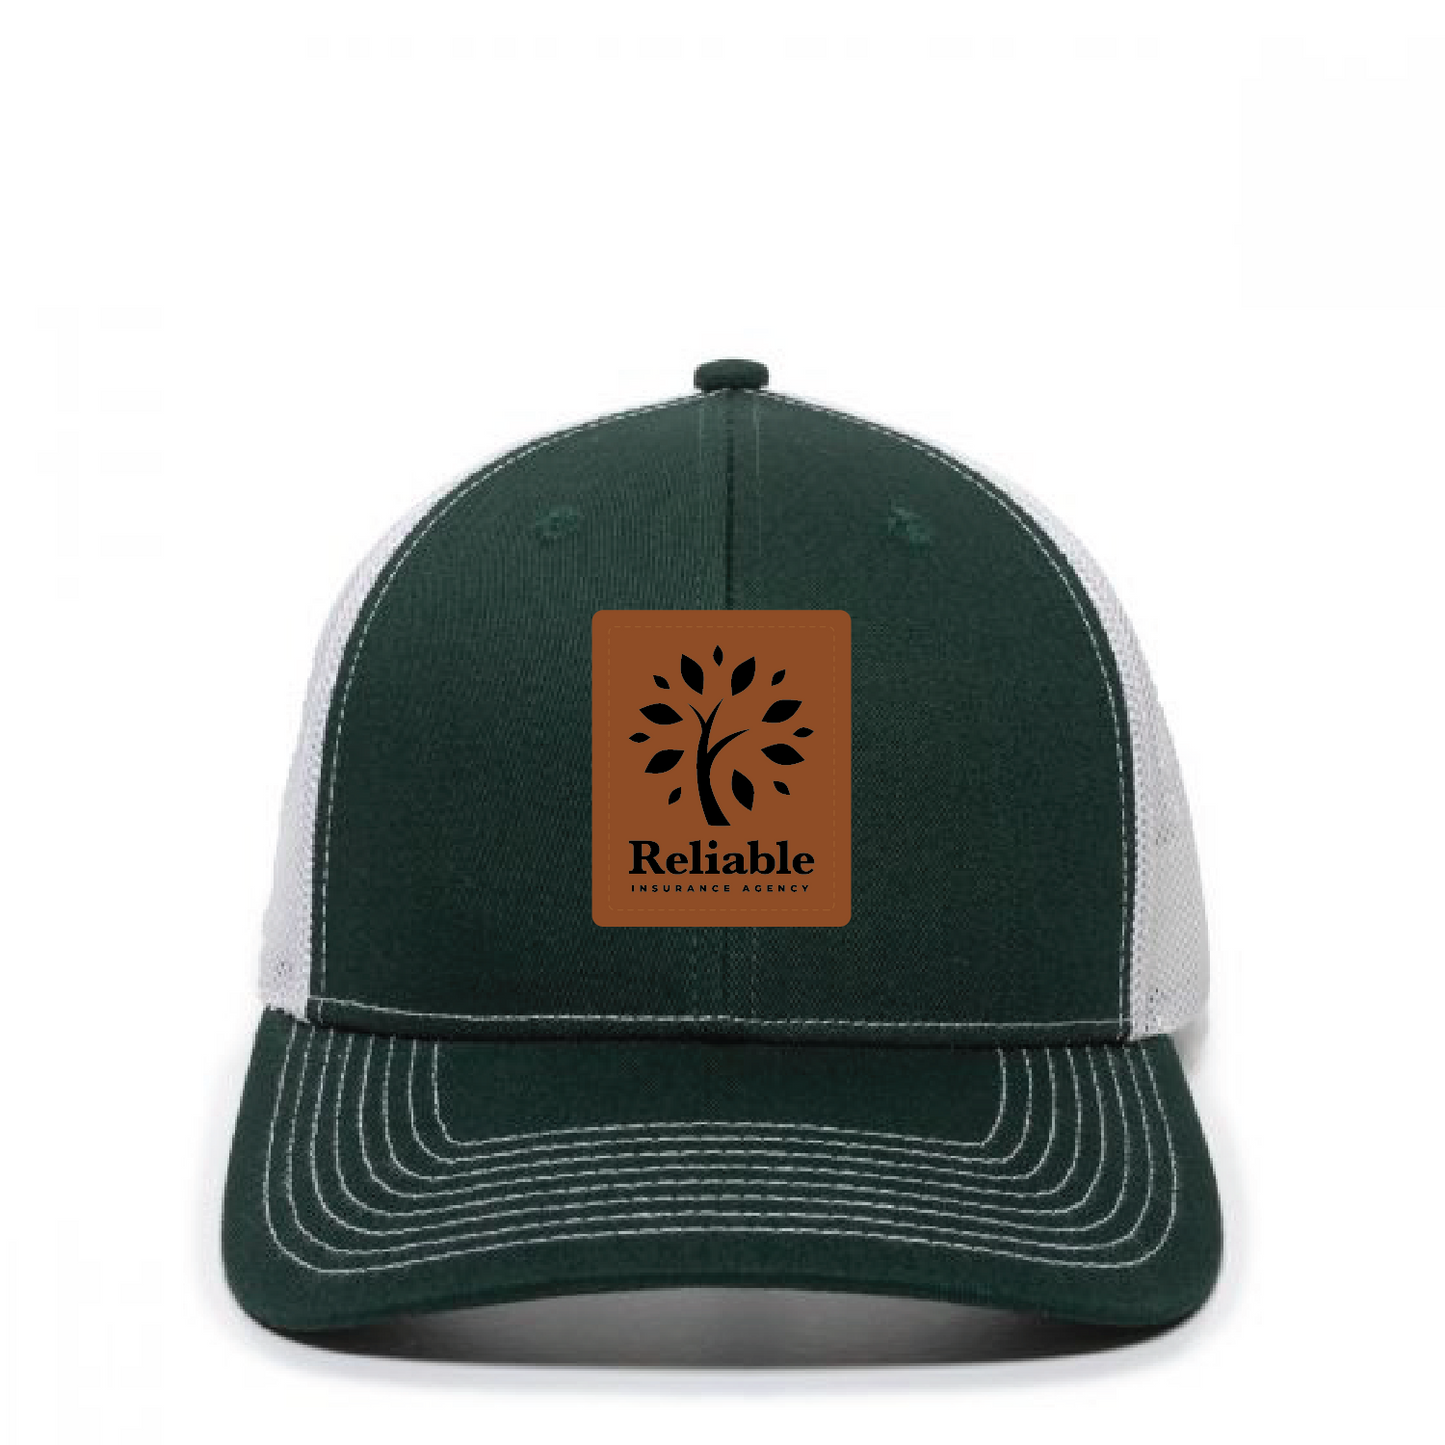 Reliable Trucker Hats